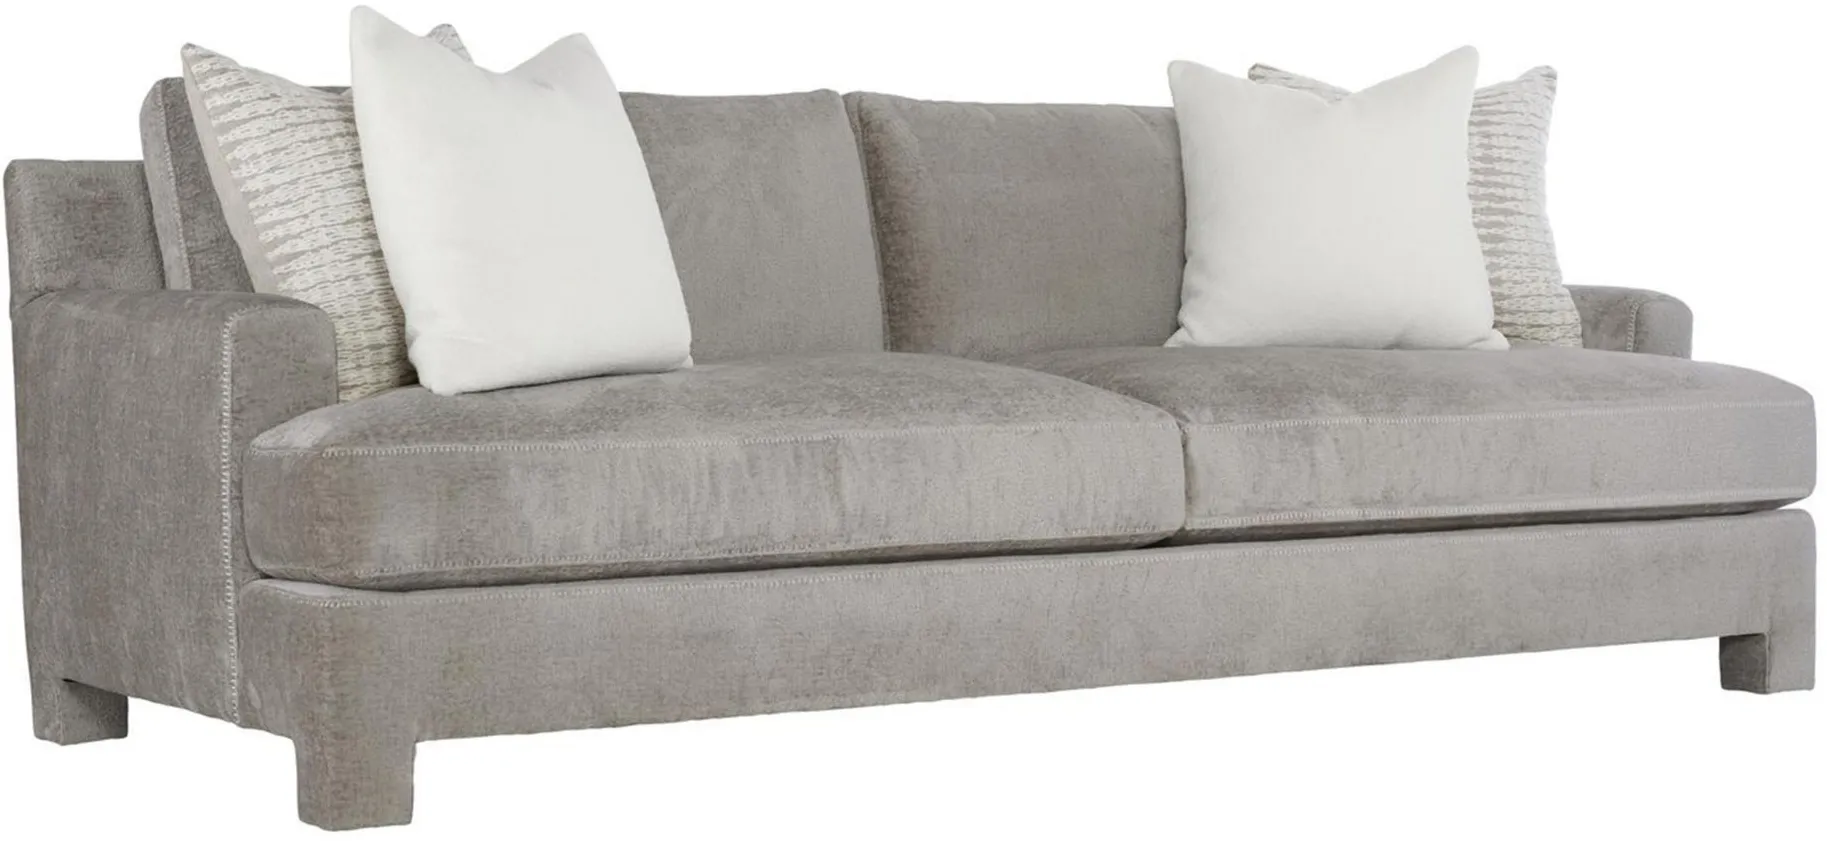 Mily Sofa in Gray by Bernhardt